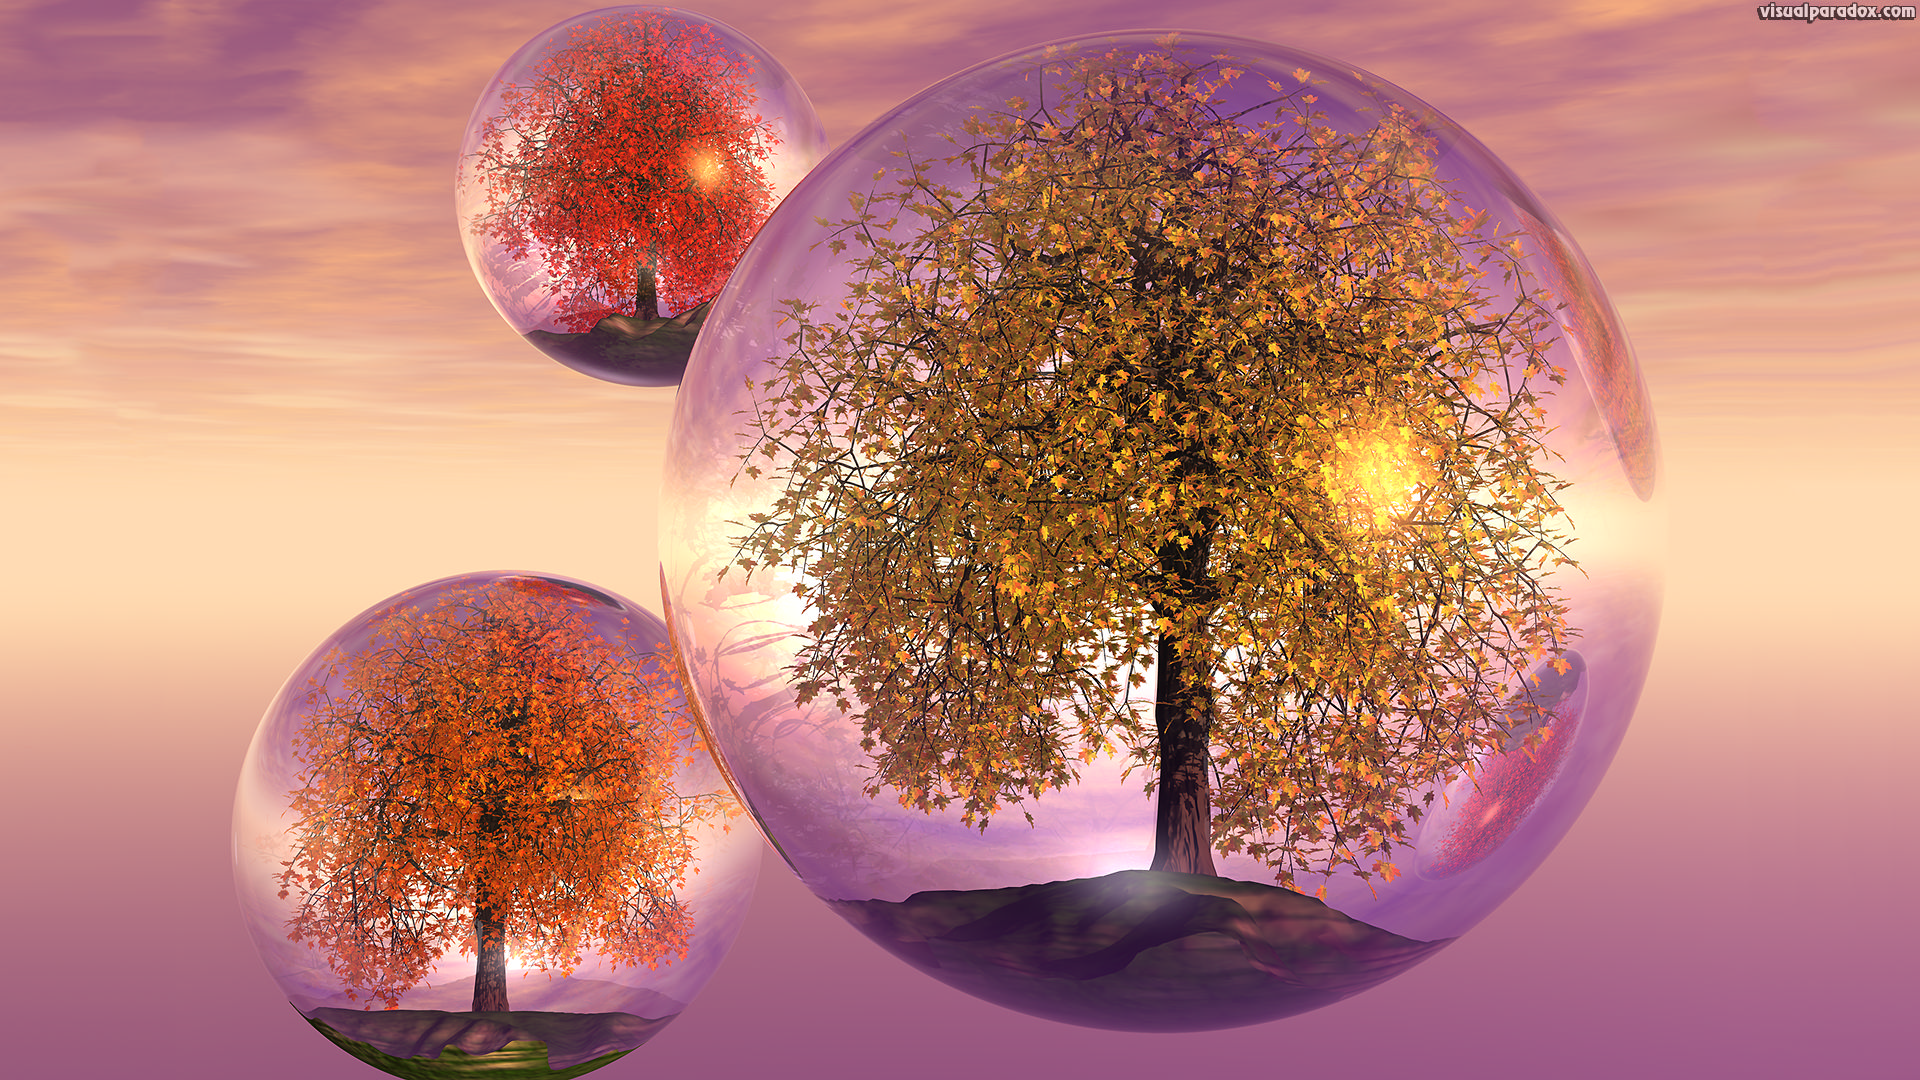 crystals, trees, autumn, fall, float, bubbles, balls, fly, terrarium, colorful, spheres, globes, crystal, sphere, balls, 3d, wallpaper